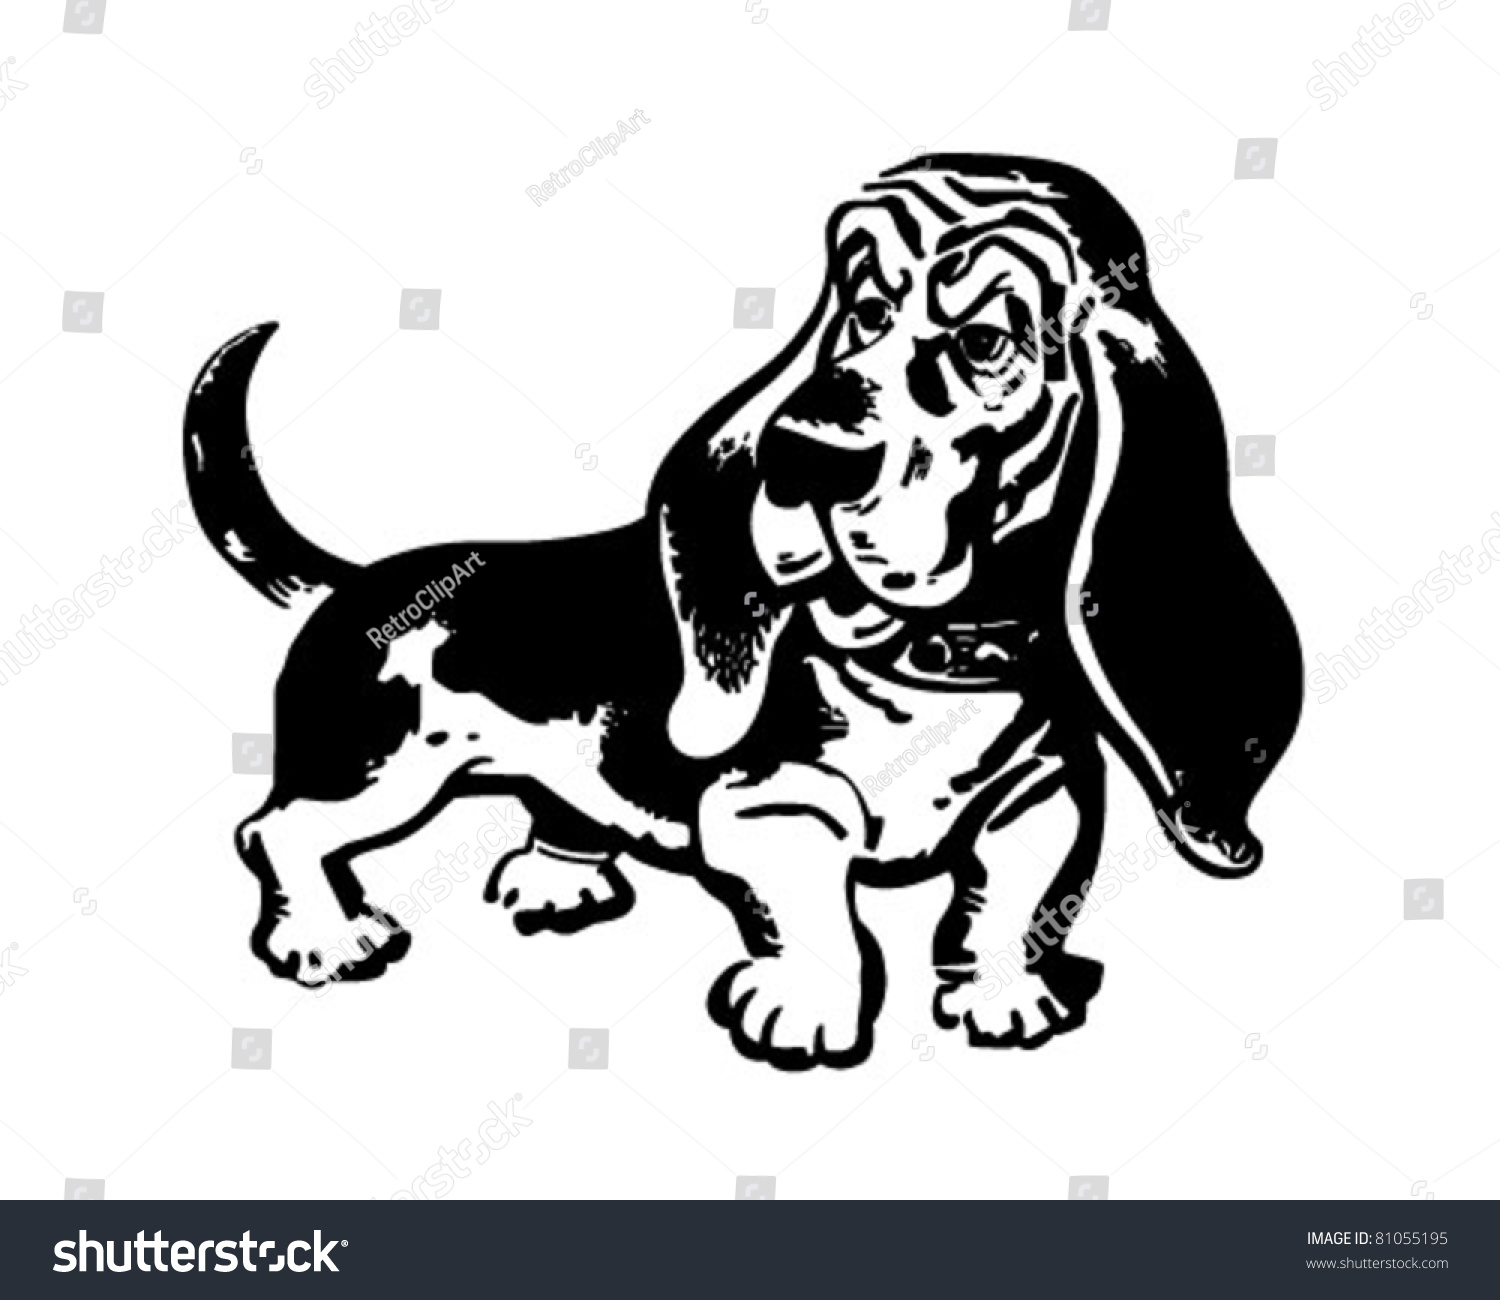 hound dog clipart - photo #26